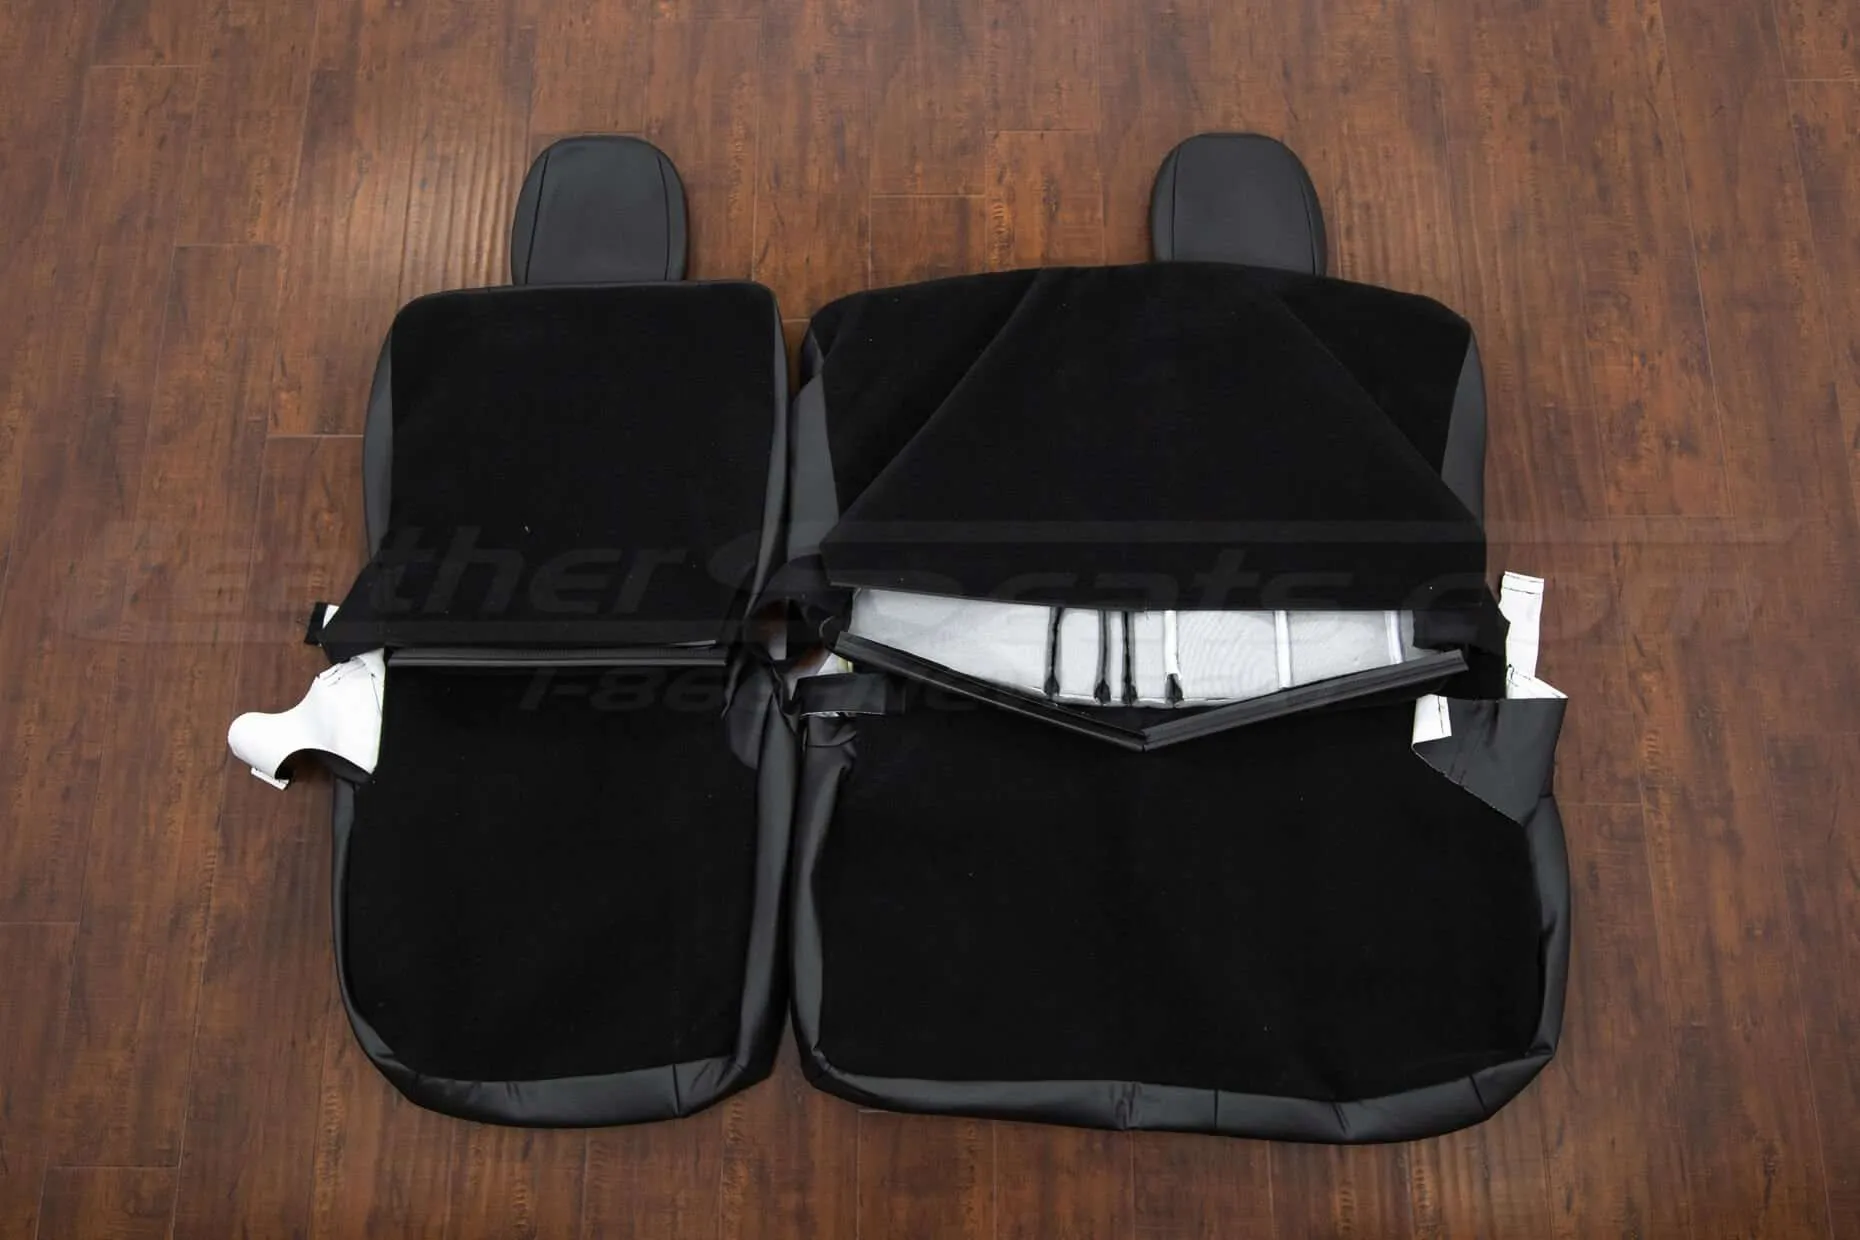 Nissan Titan Upholstery Kit - Black - Back view of rear seats